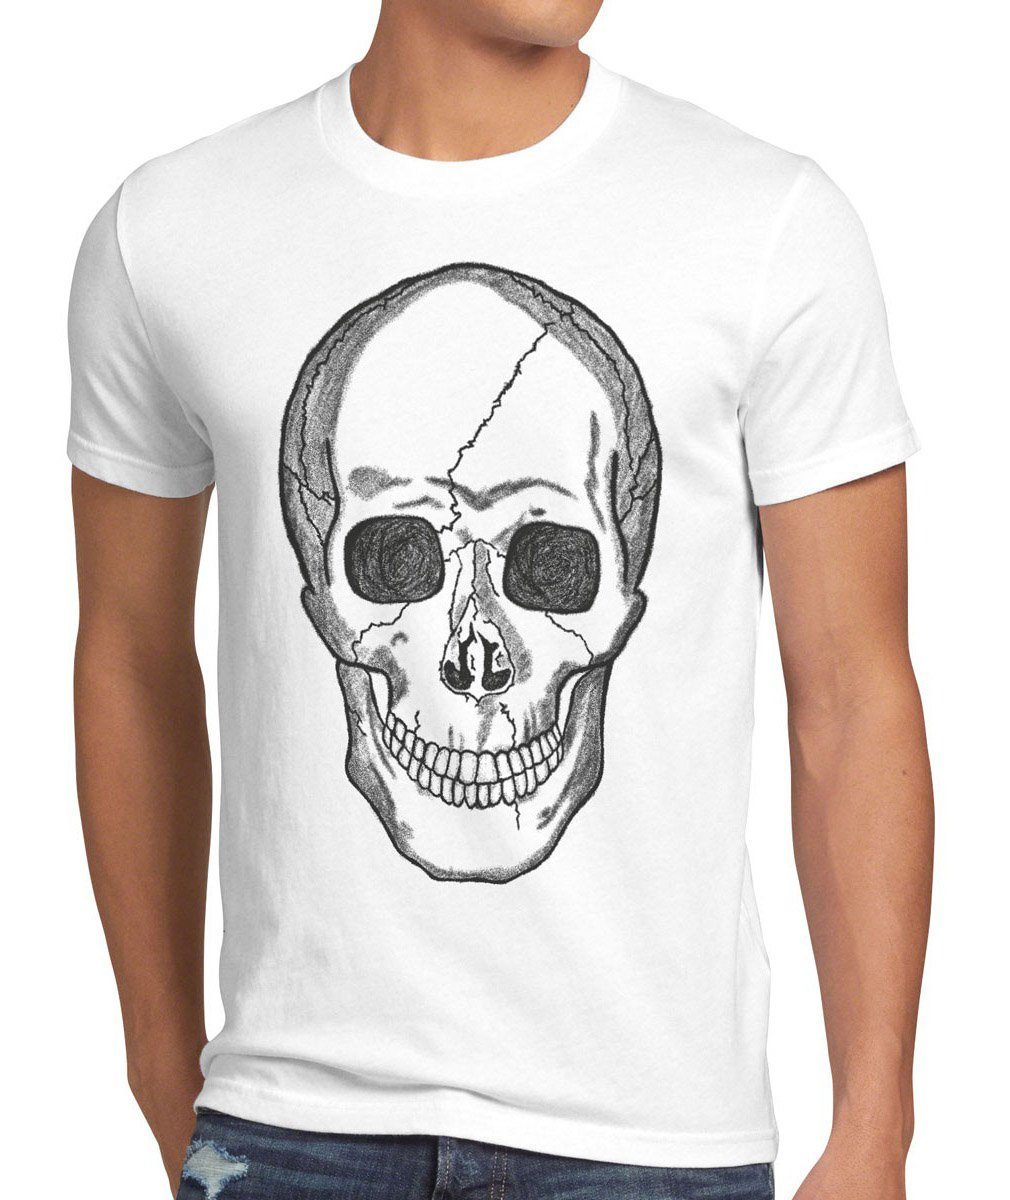 style3 Print-Shirt Herren T-Shirt Skull Totenkopf Harley Rocker Punk Tattoo gothic knochen biker us weiß